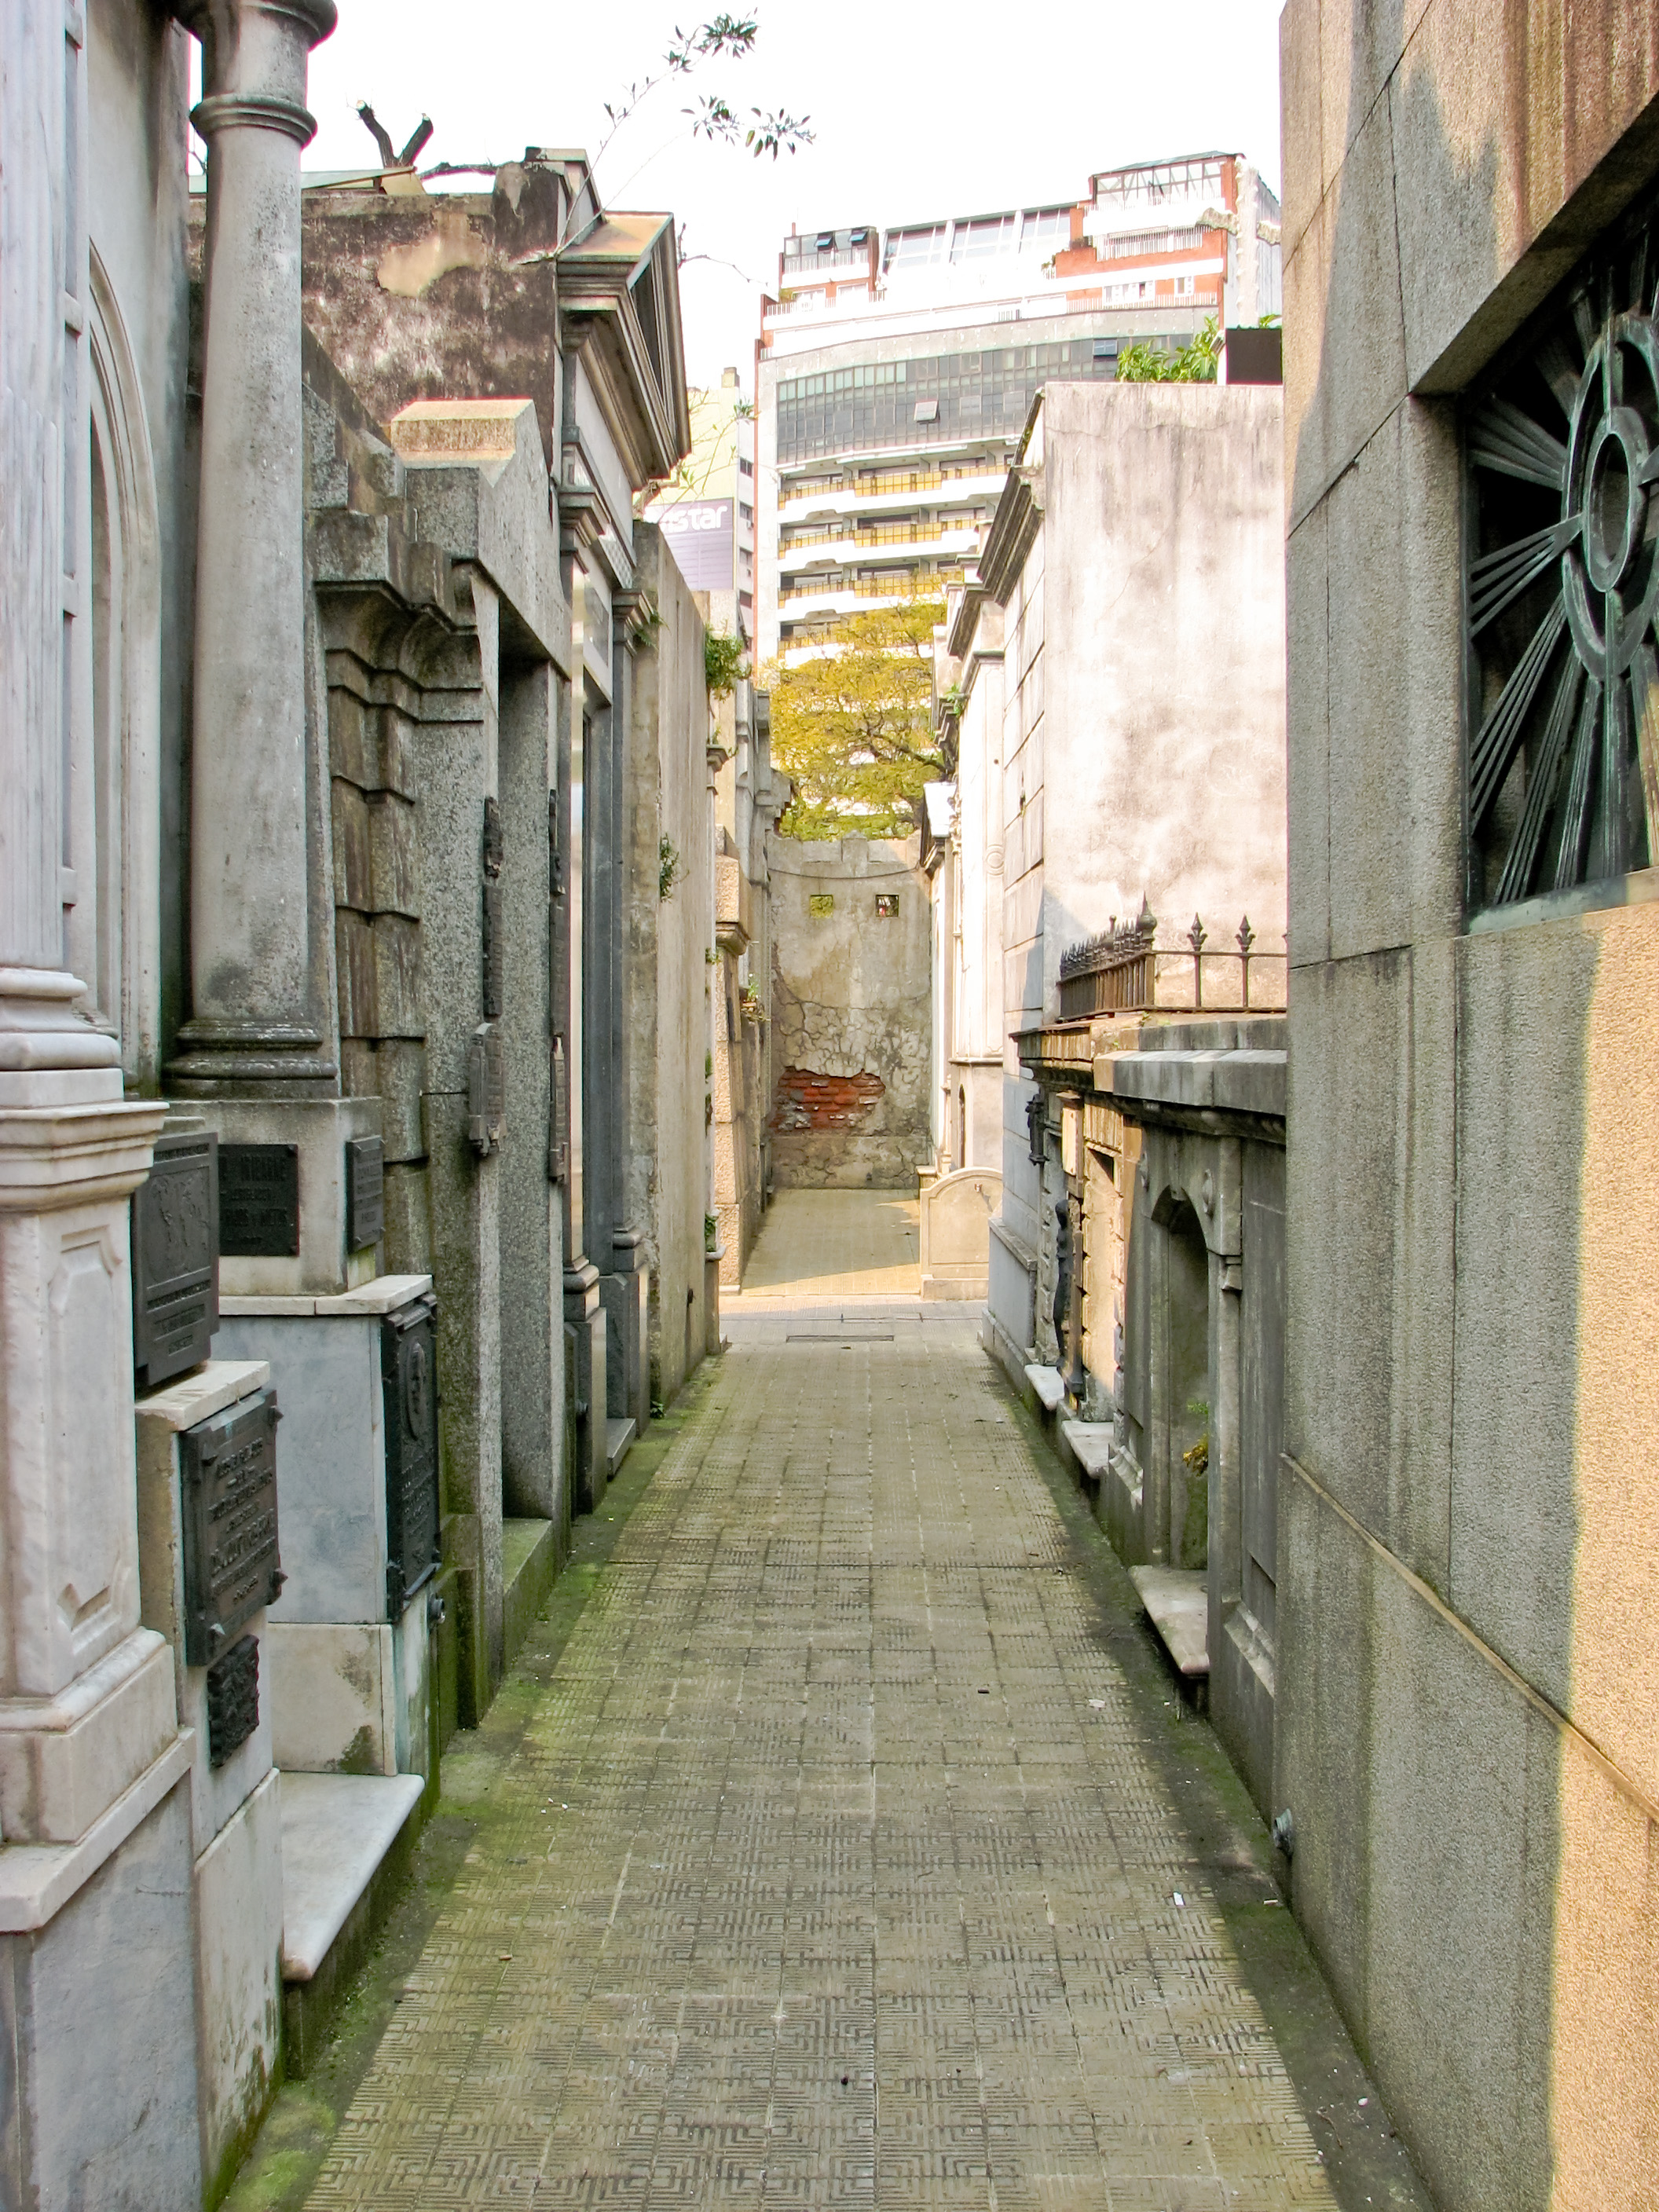 Cemetery scape, Burial, Gravestone, Tomb, Street, HQ Photo